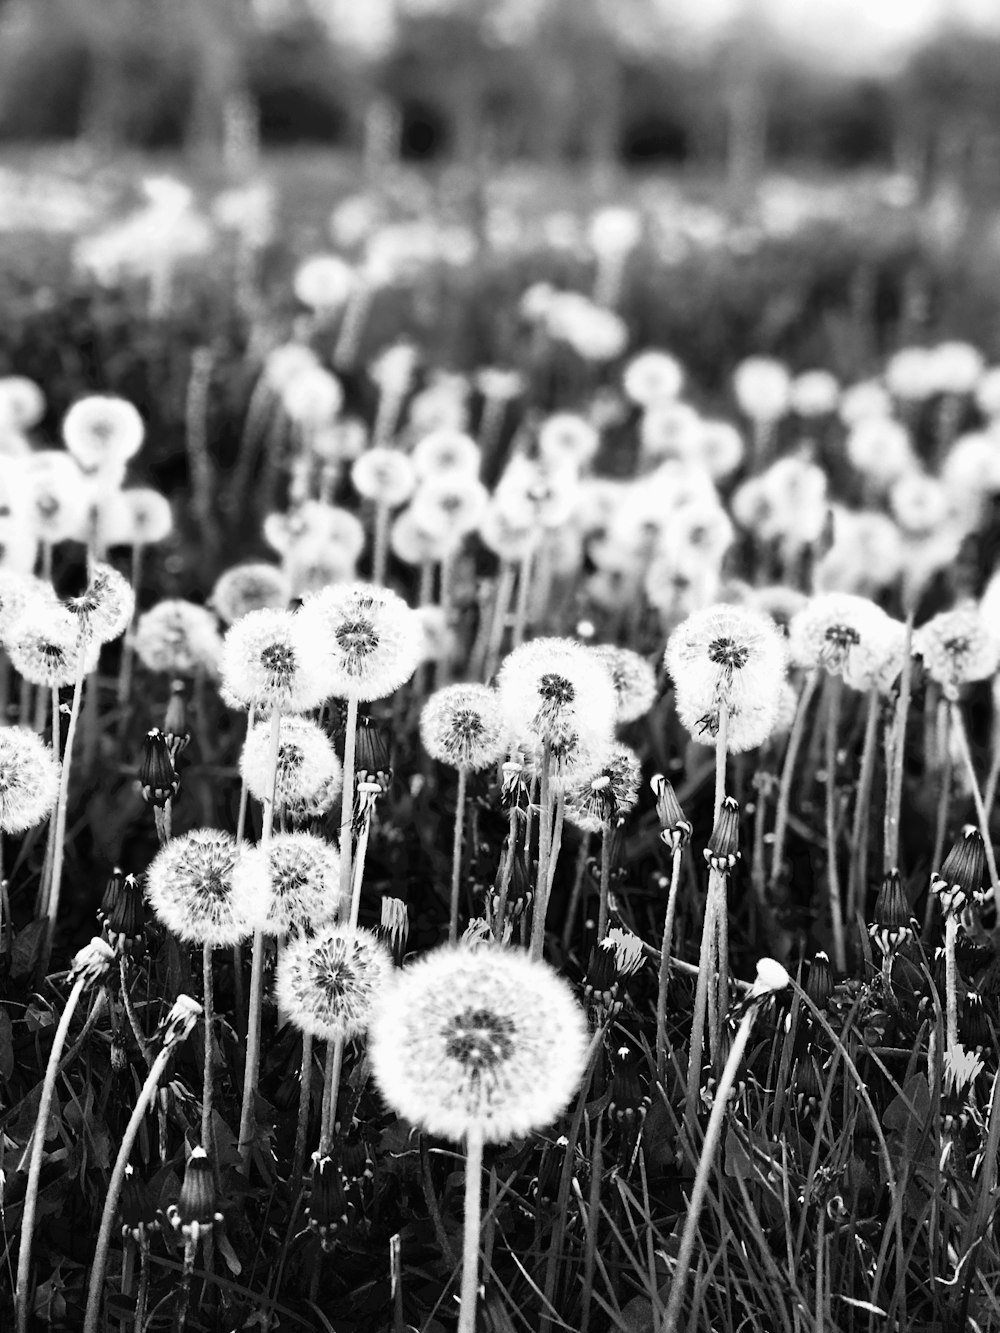 grayscale photo of dandelion flower